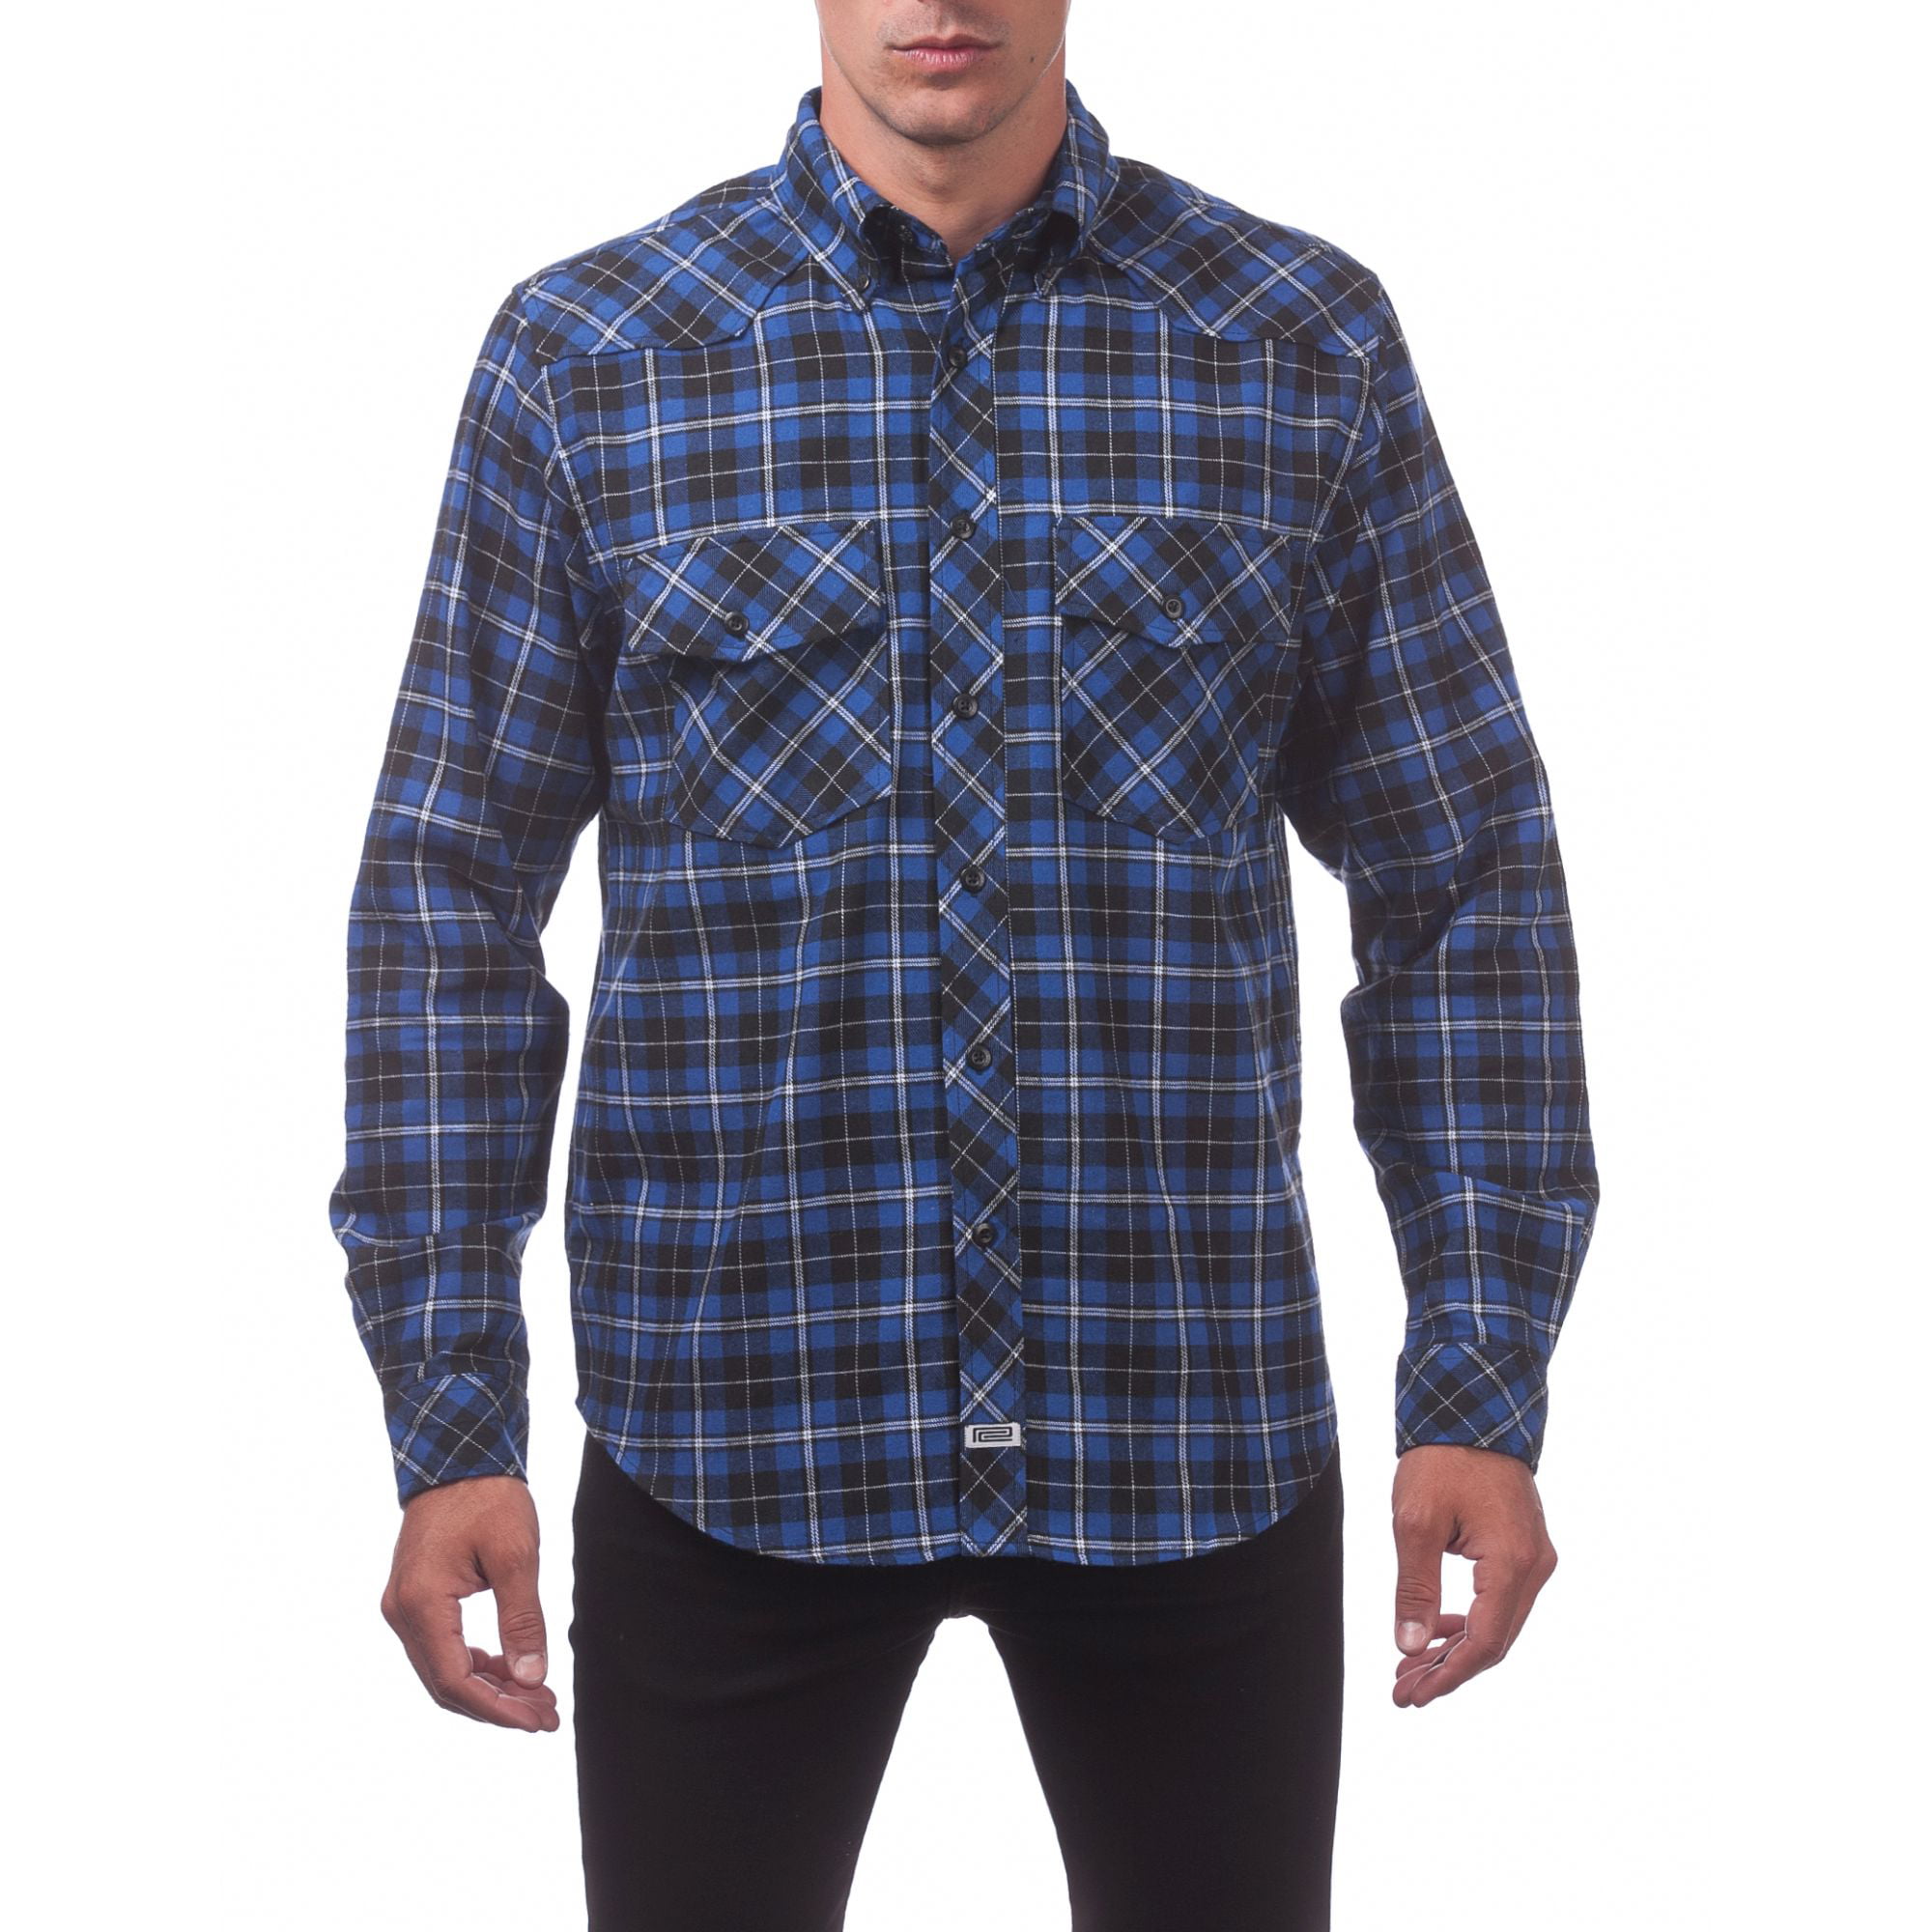 Pro Club - Men's Flannel Shirt, X-Large, (Royal Blue, Black, White